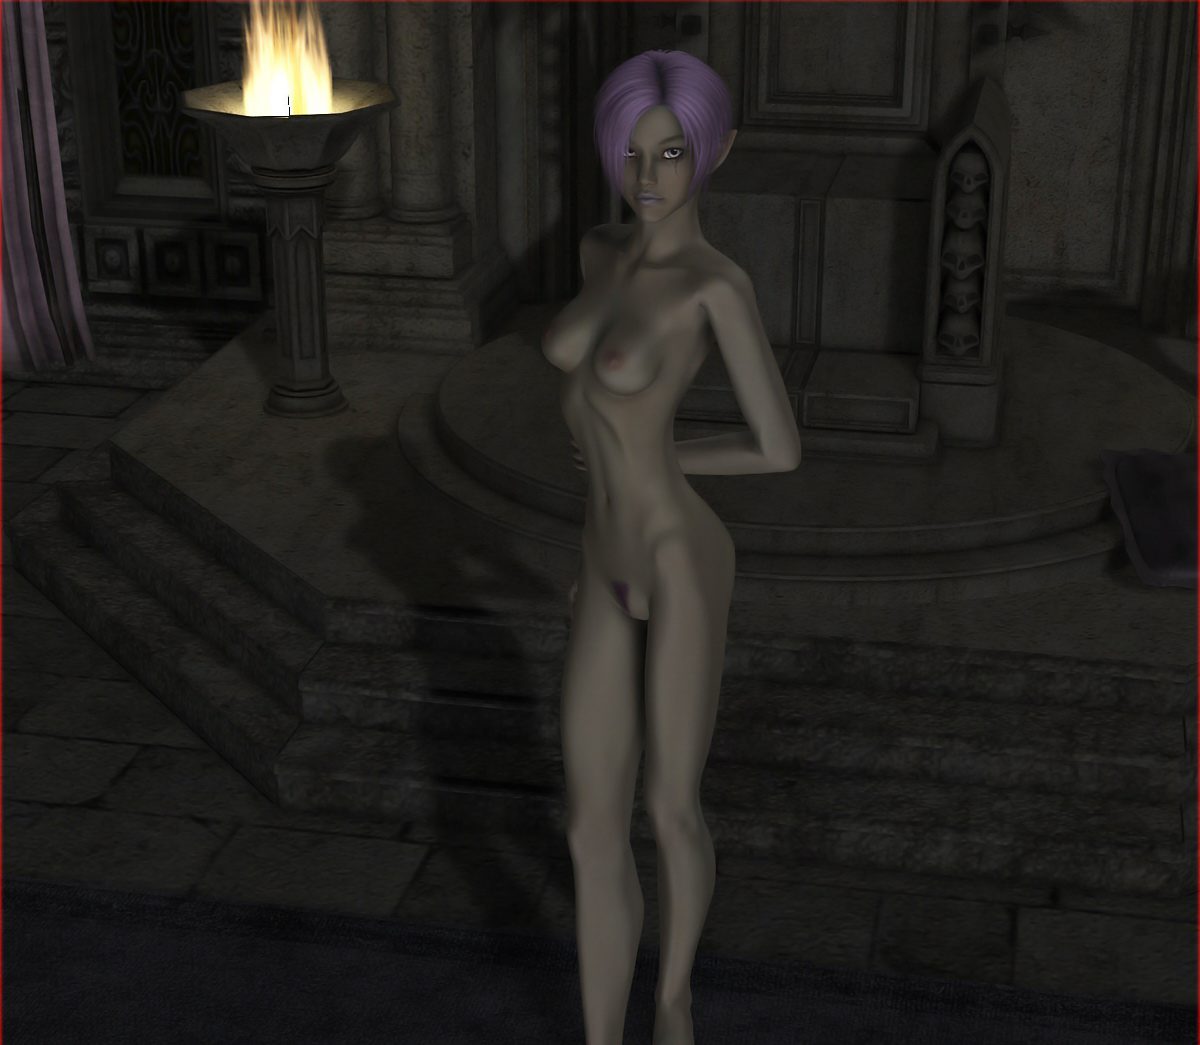 3d Fantasy Girls - Cute stripped fantasy girl wants sex - 3D Porn @ Hard Cartoon Porn